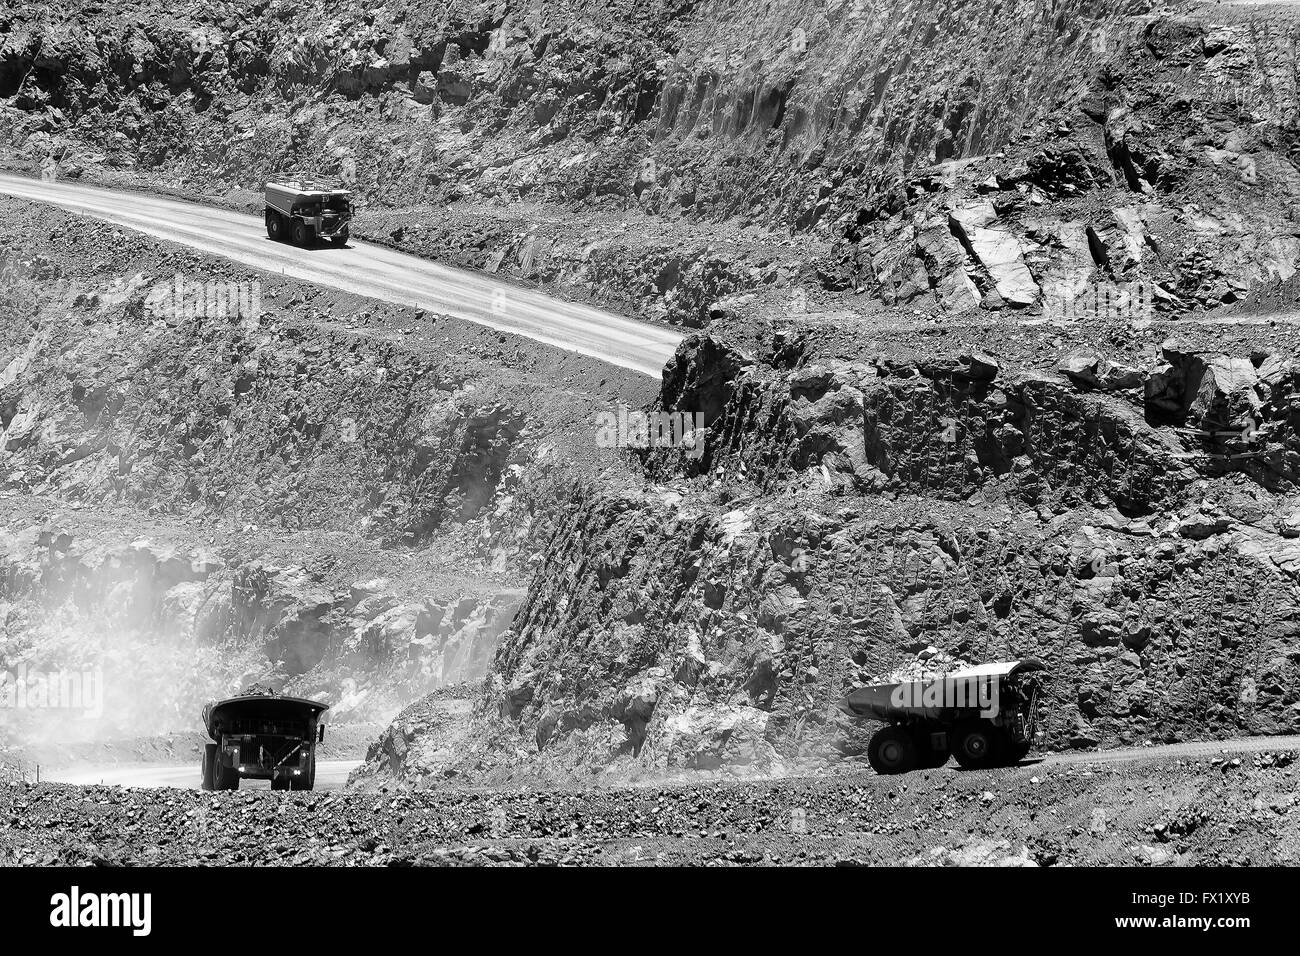 Loaded industrial trucks carrying heavy load of golden ore uphill from open pit gold mine in Kalgoorlie, Western Australia. Stock Photo